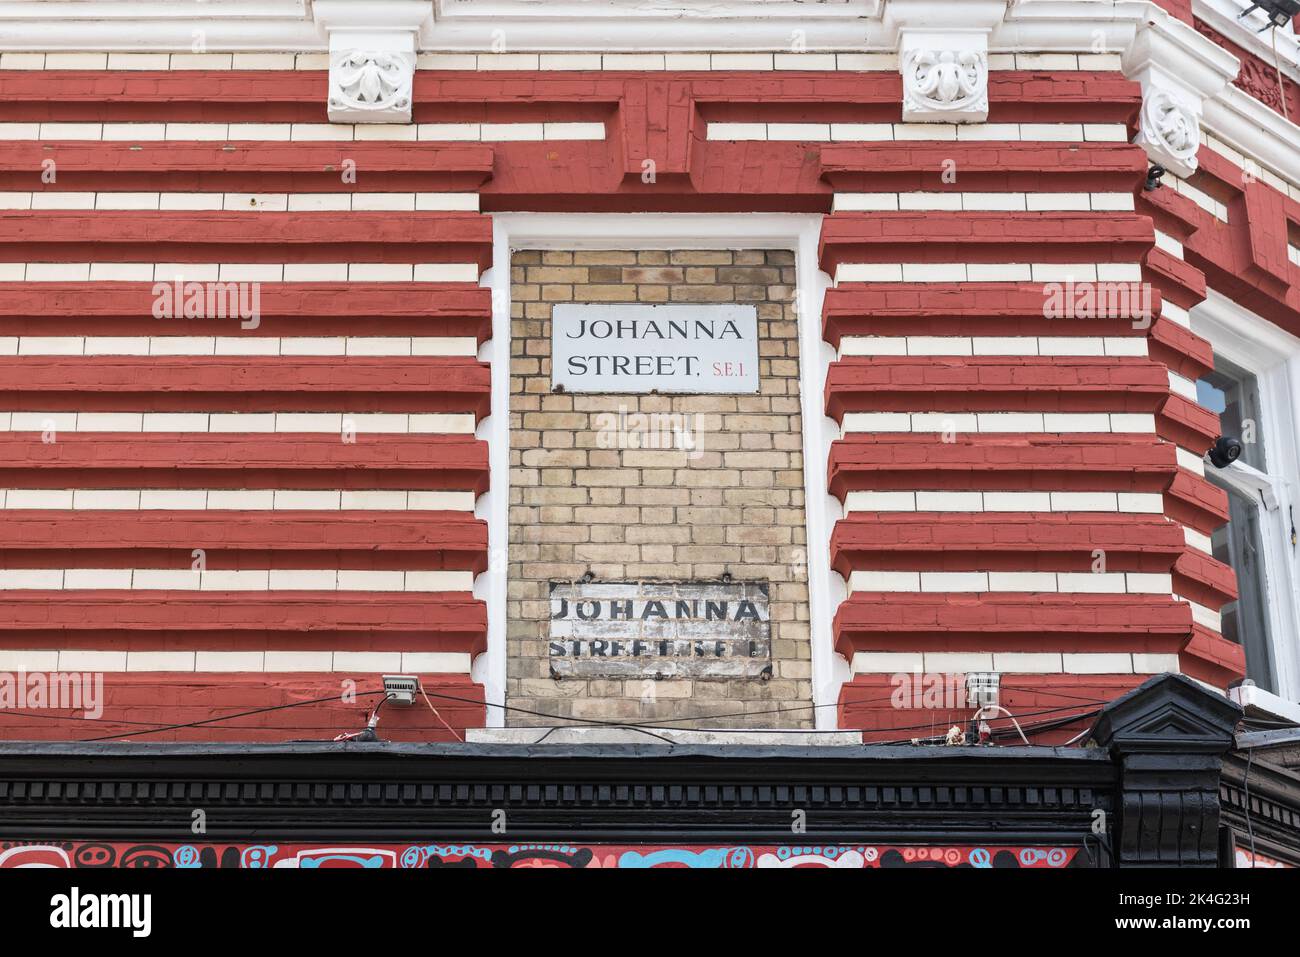 Johanna Street, Lower Marsh, London, SE1 Stock Photo